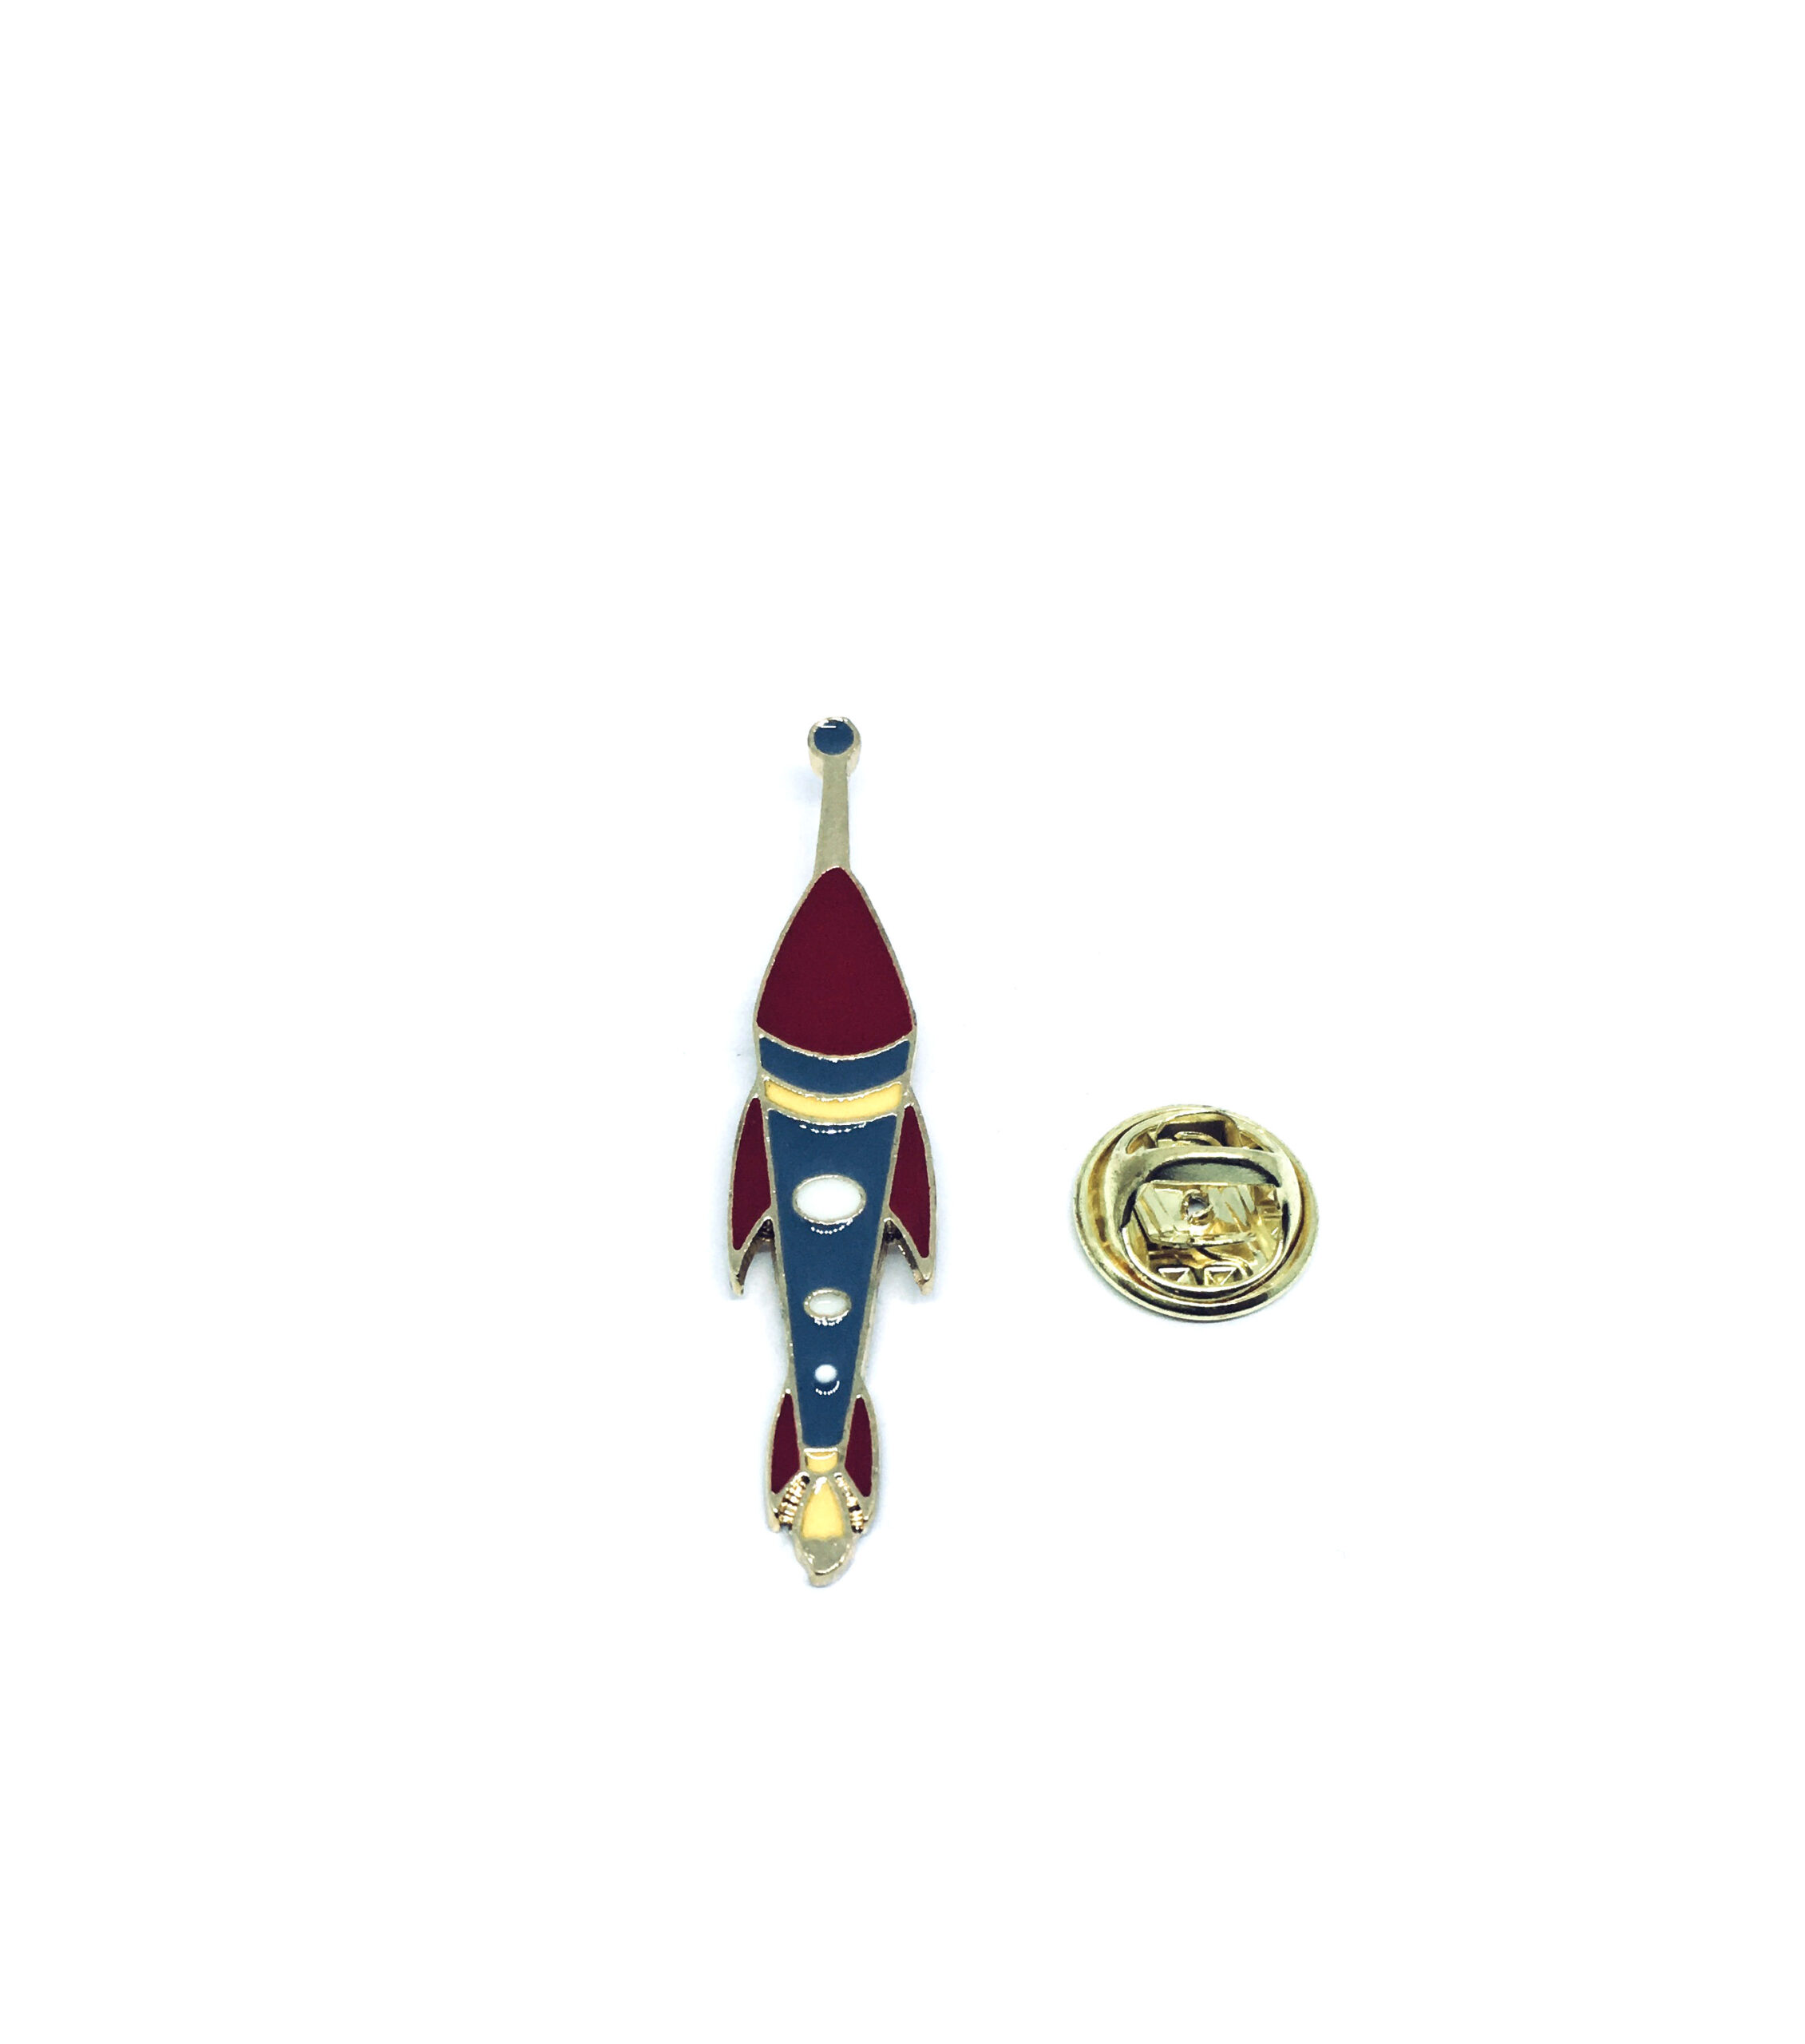 Rocket Ship Pin